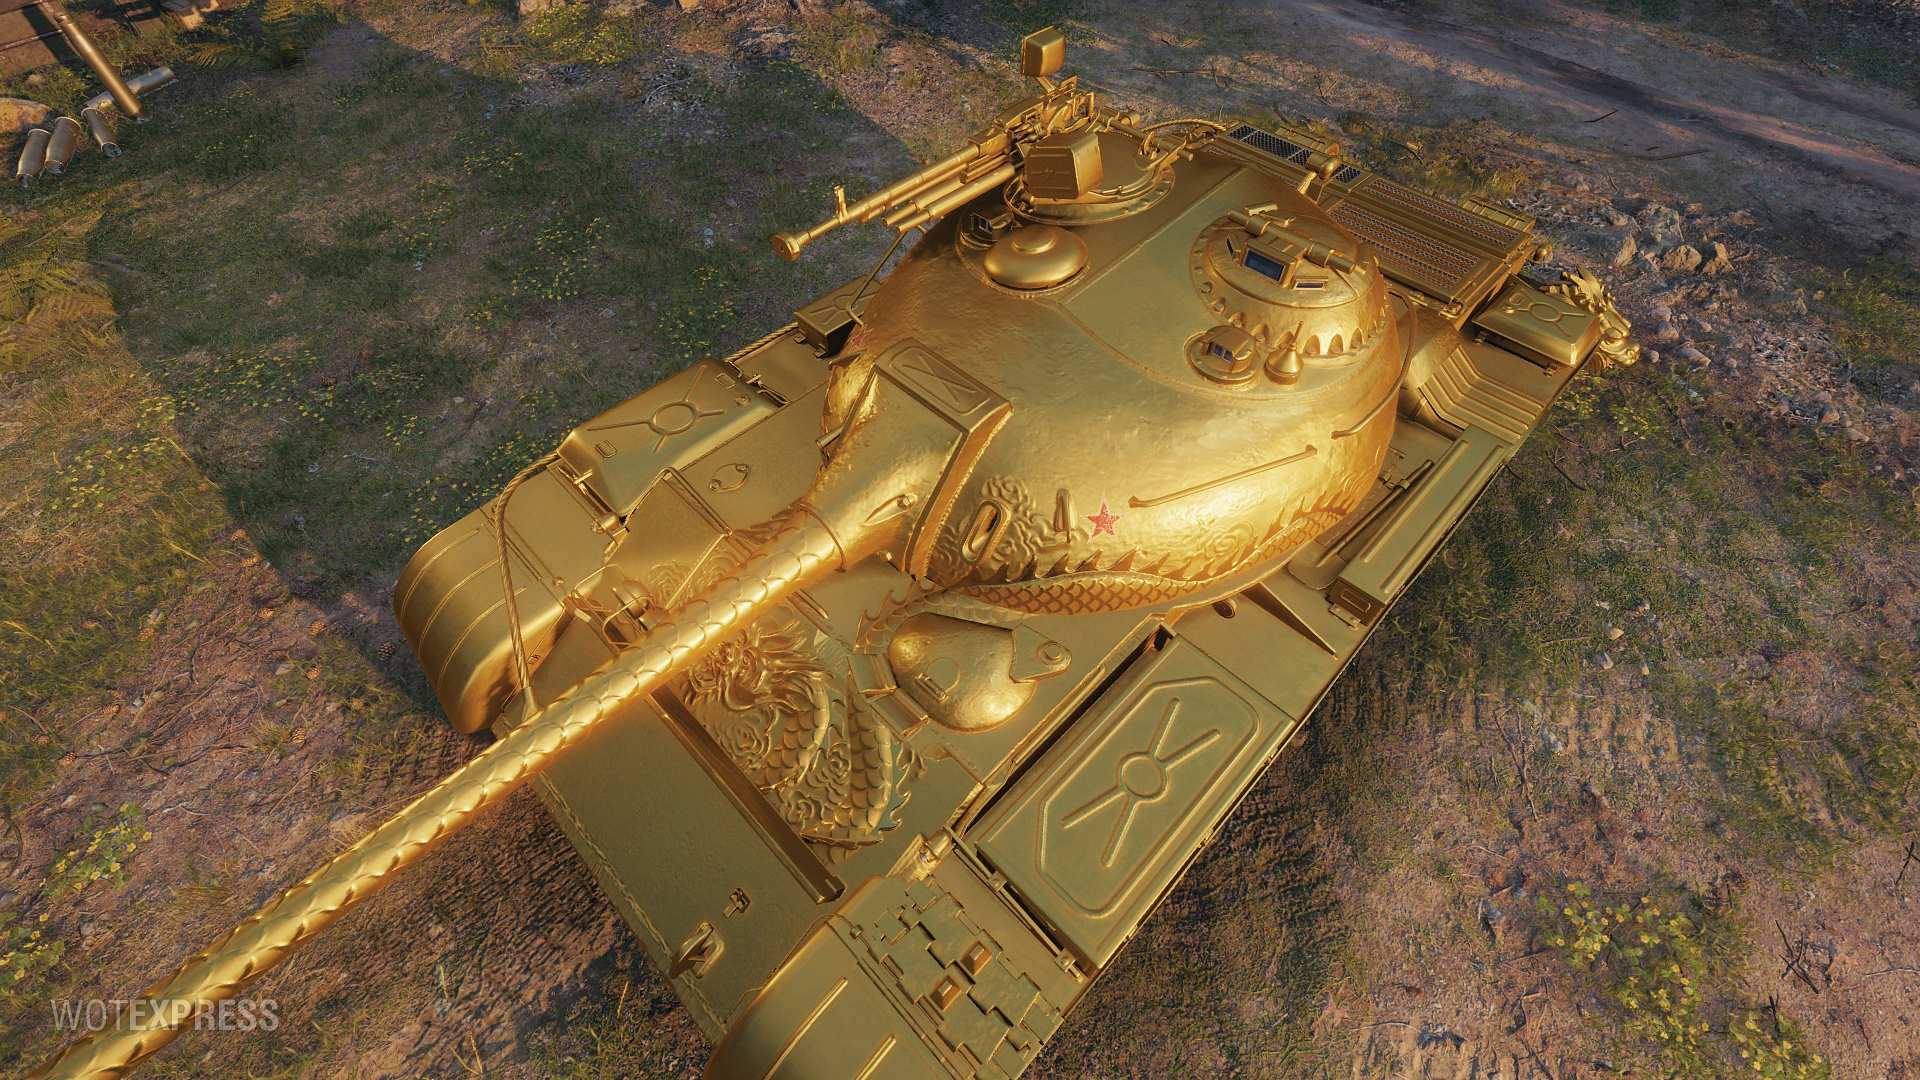 World of tanks цена